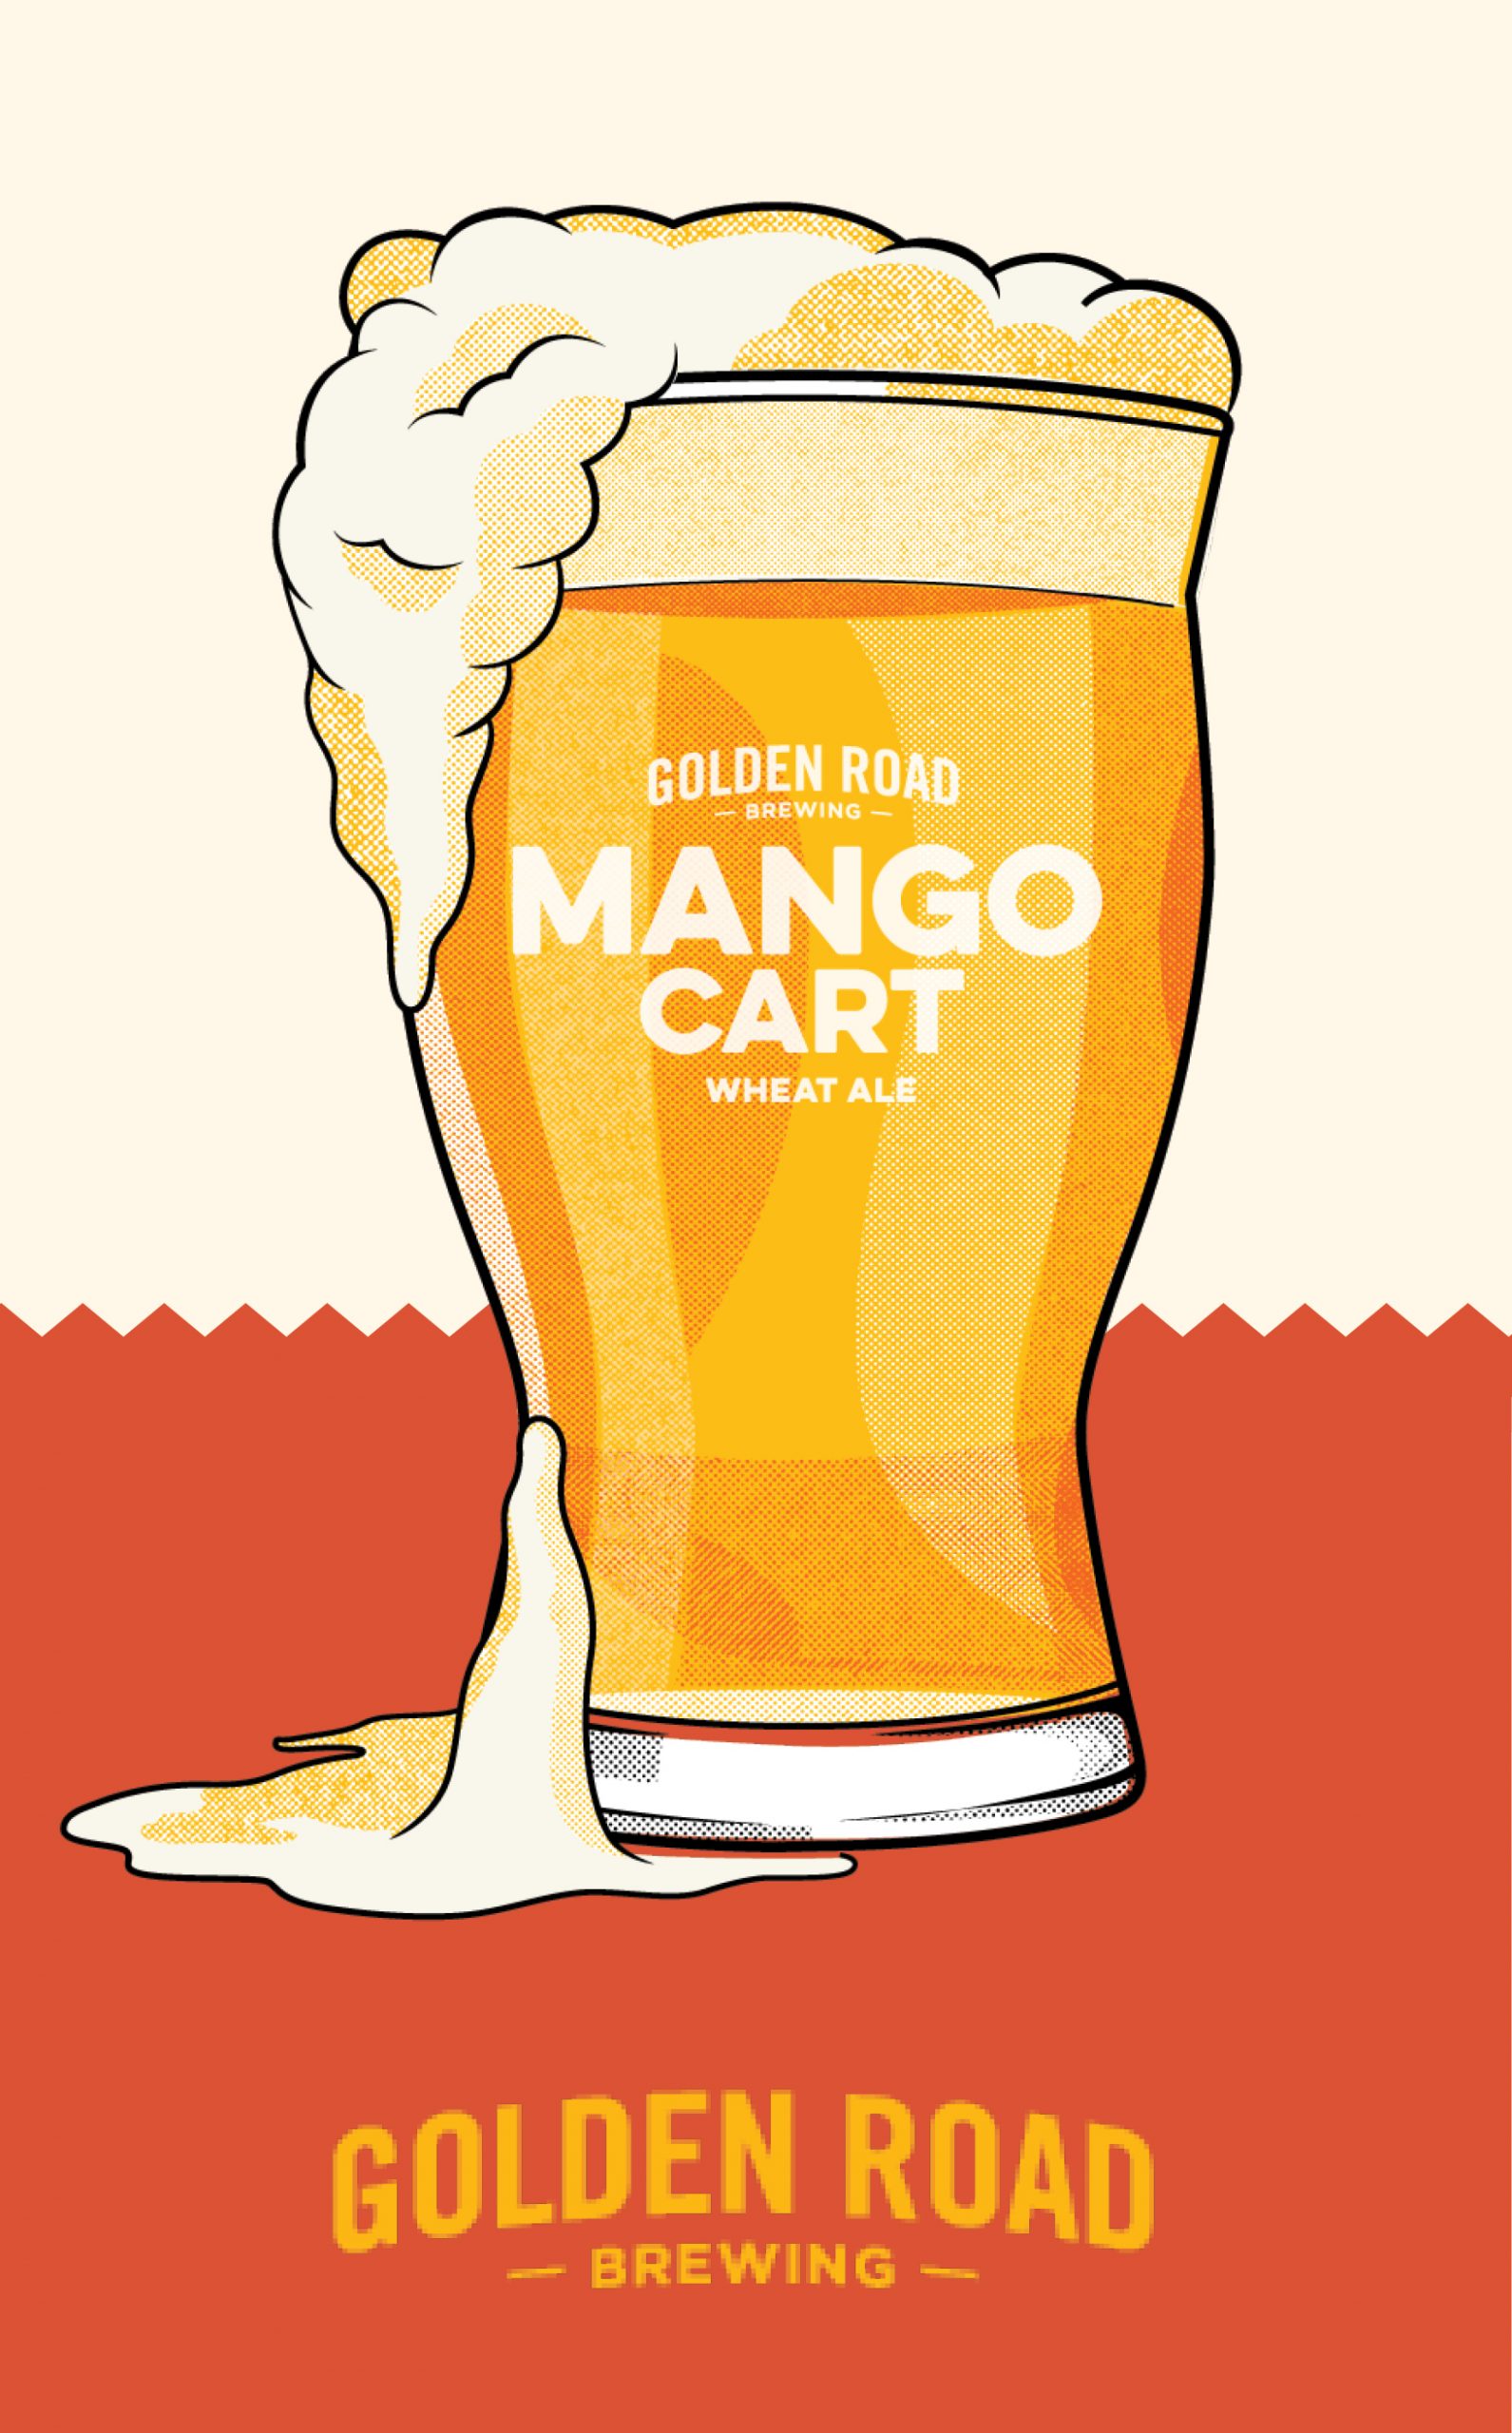 Mango cart beer promotion